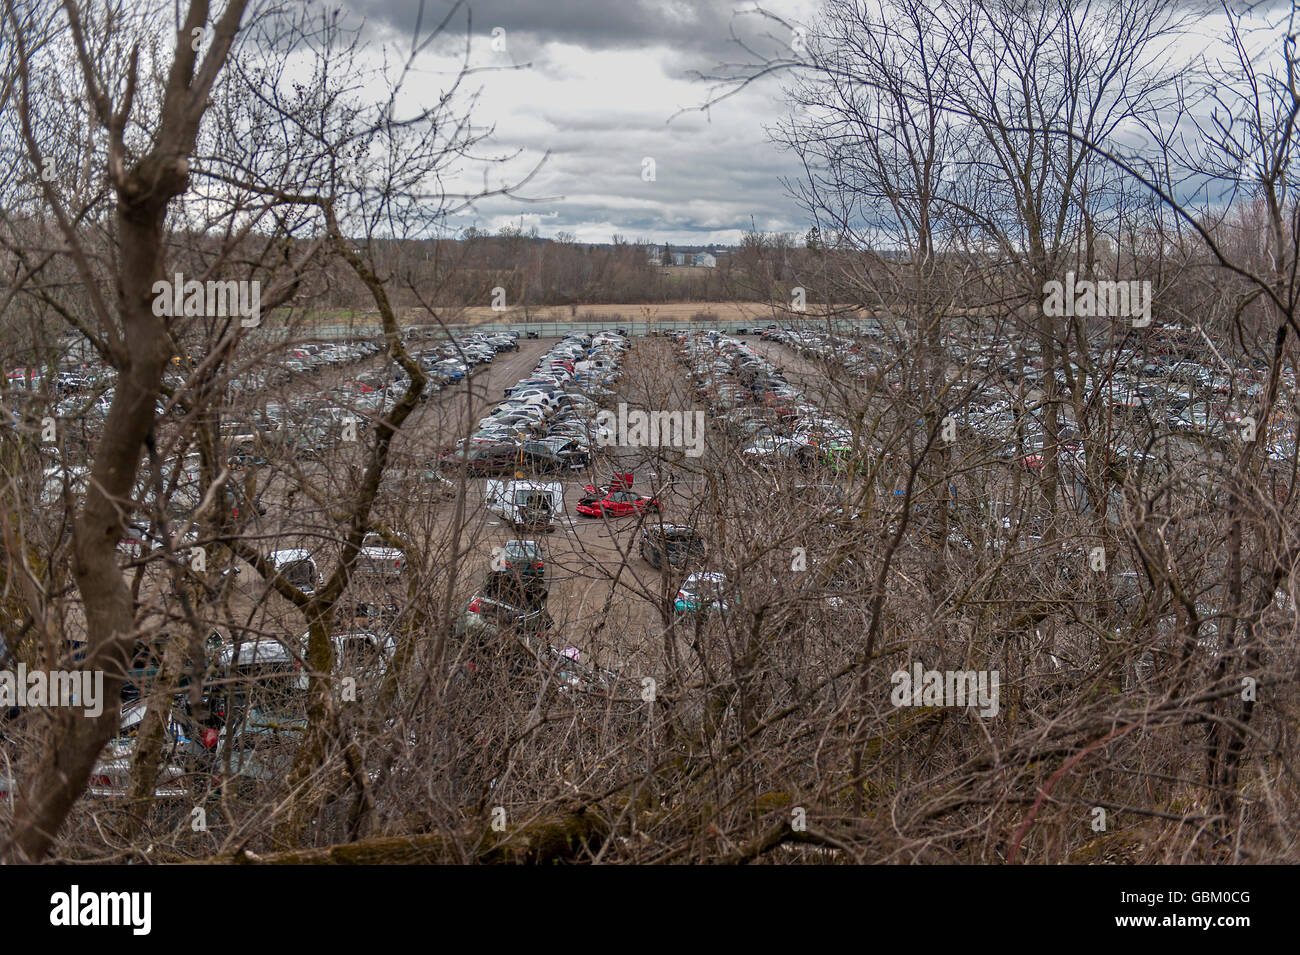 overview of scrapyard/junkyard through leafless trees Stock Photo